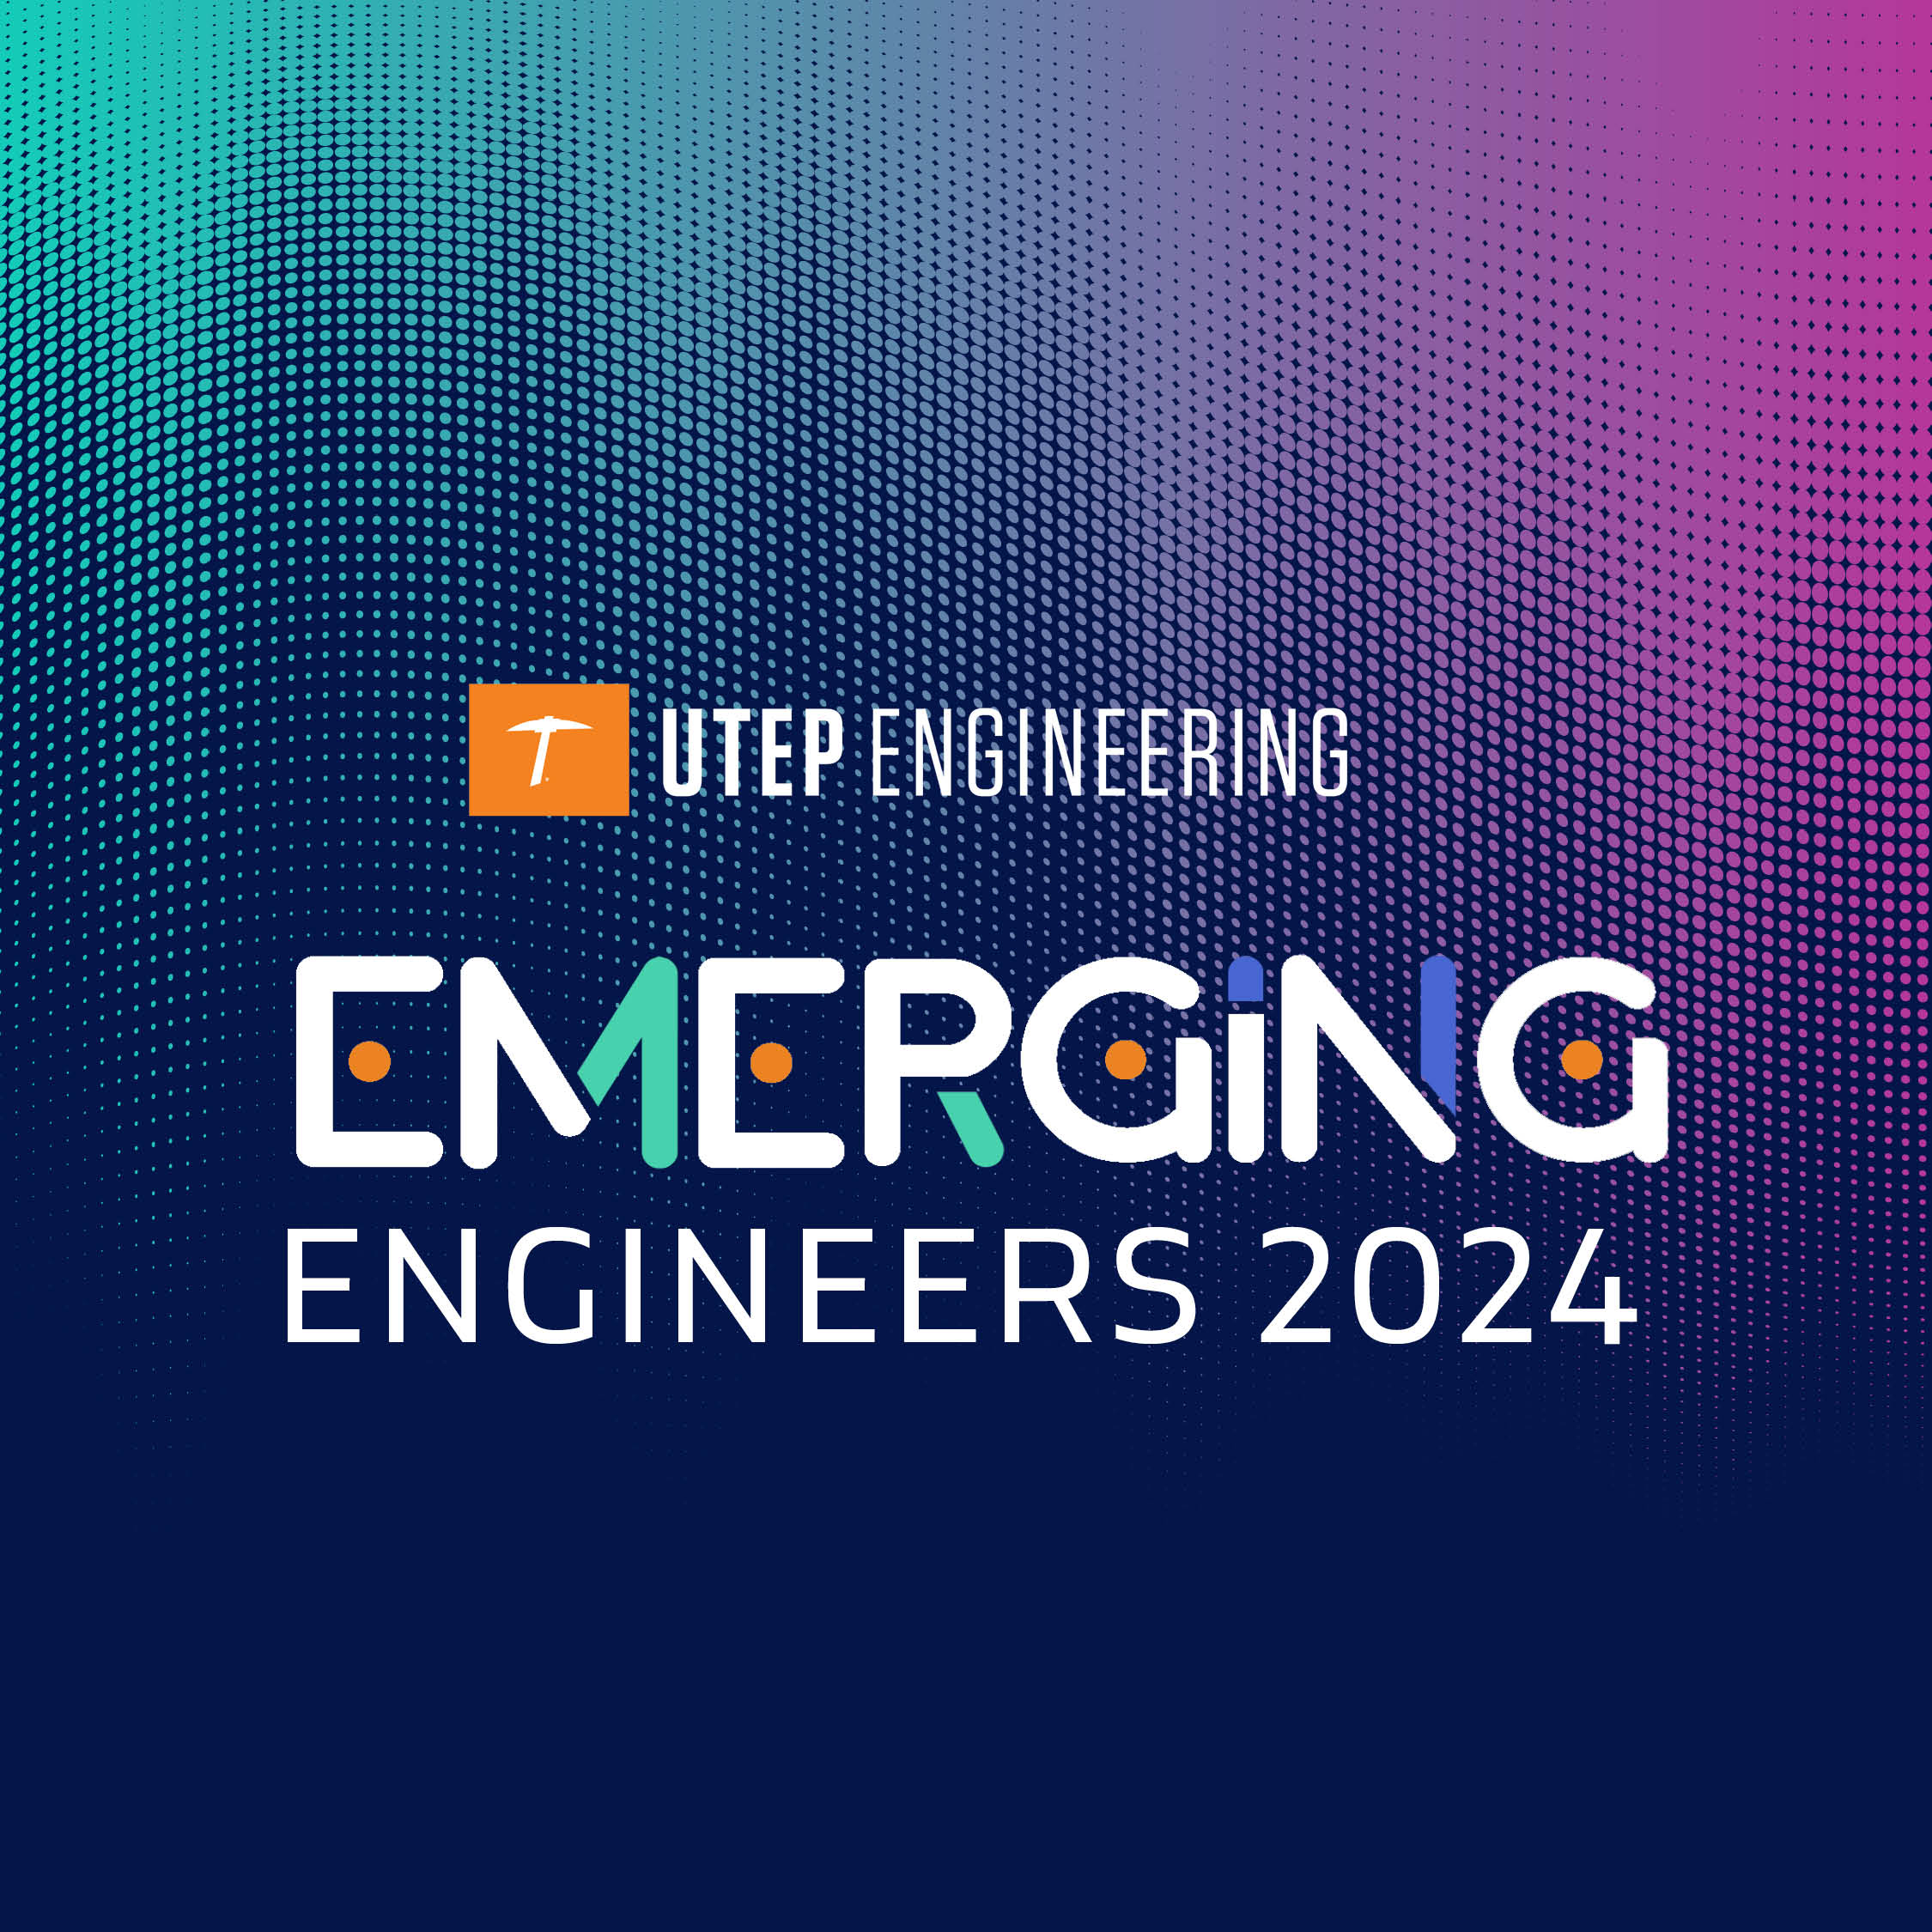 Emerging Engineers Class of 2024